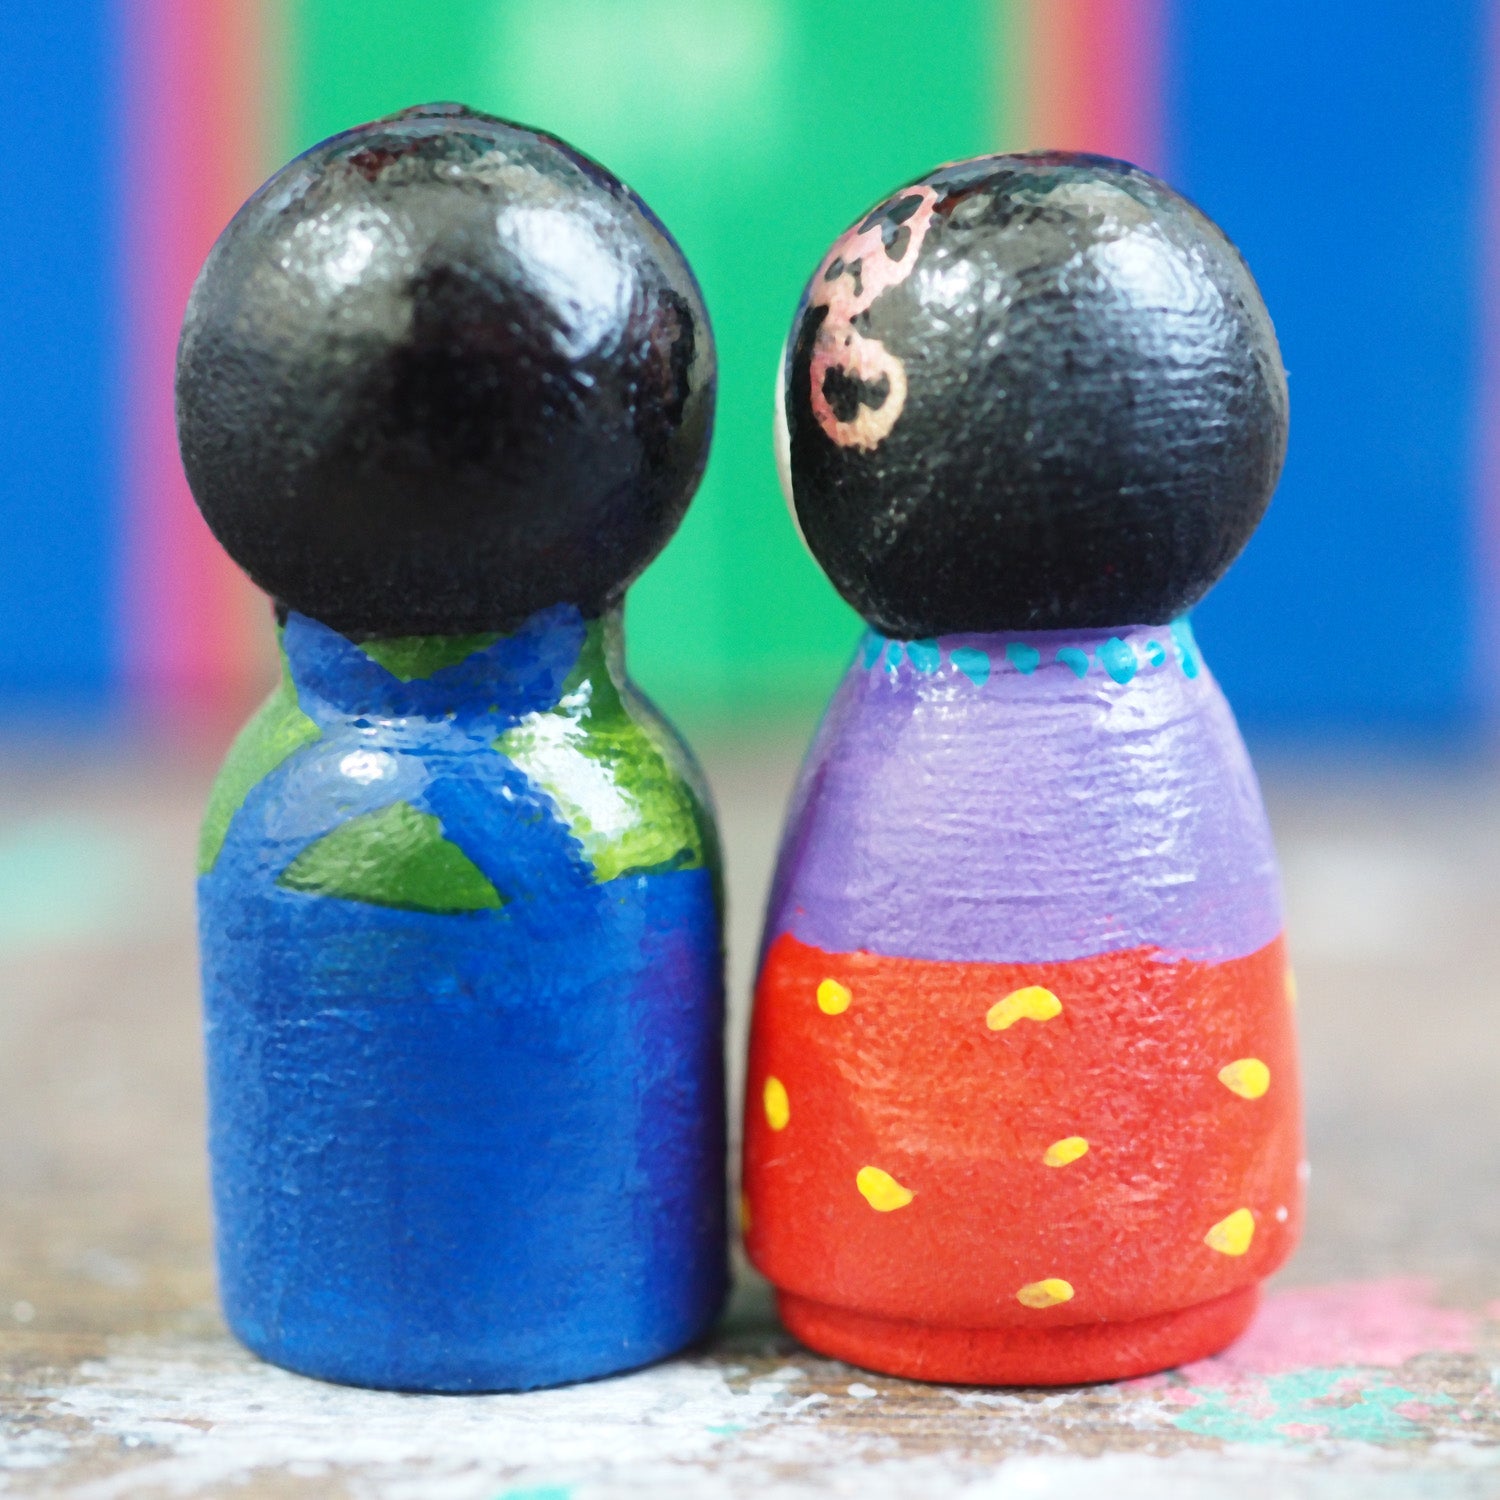 FRIDA AND DIEGO, Miniature Dolls by Danita Art